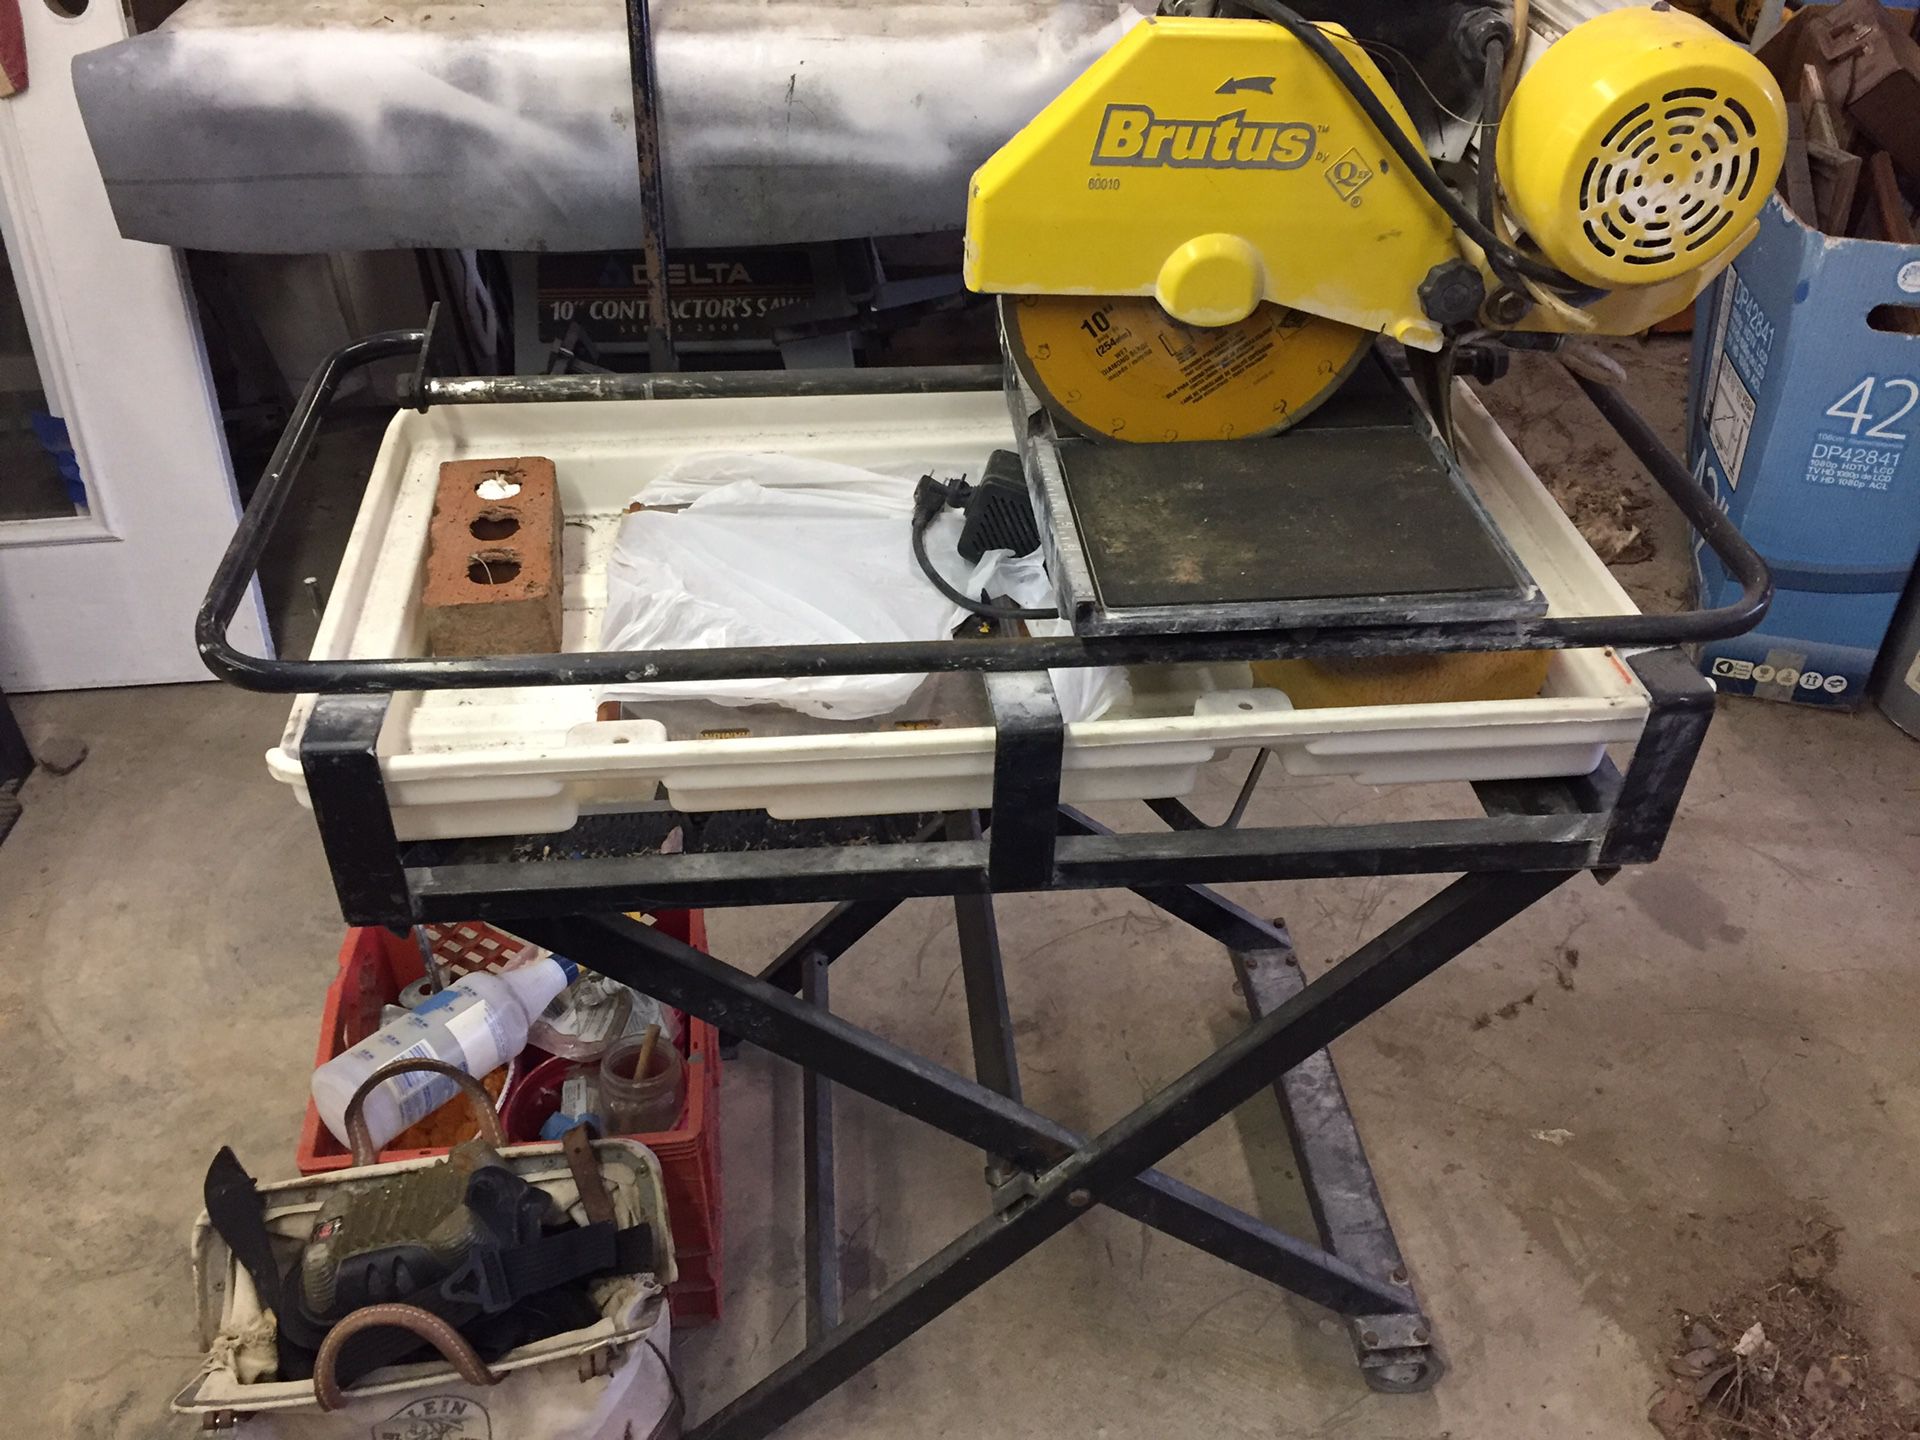 Brutus 18” Professional Tile Saw 60010 w/tile tools